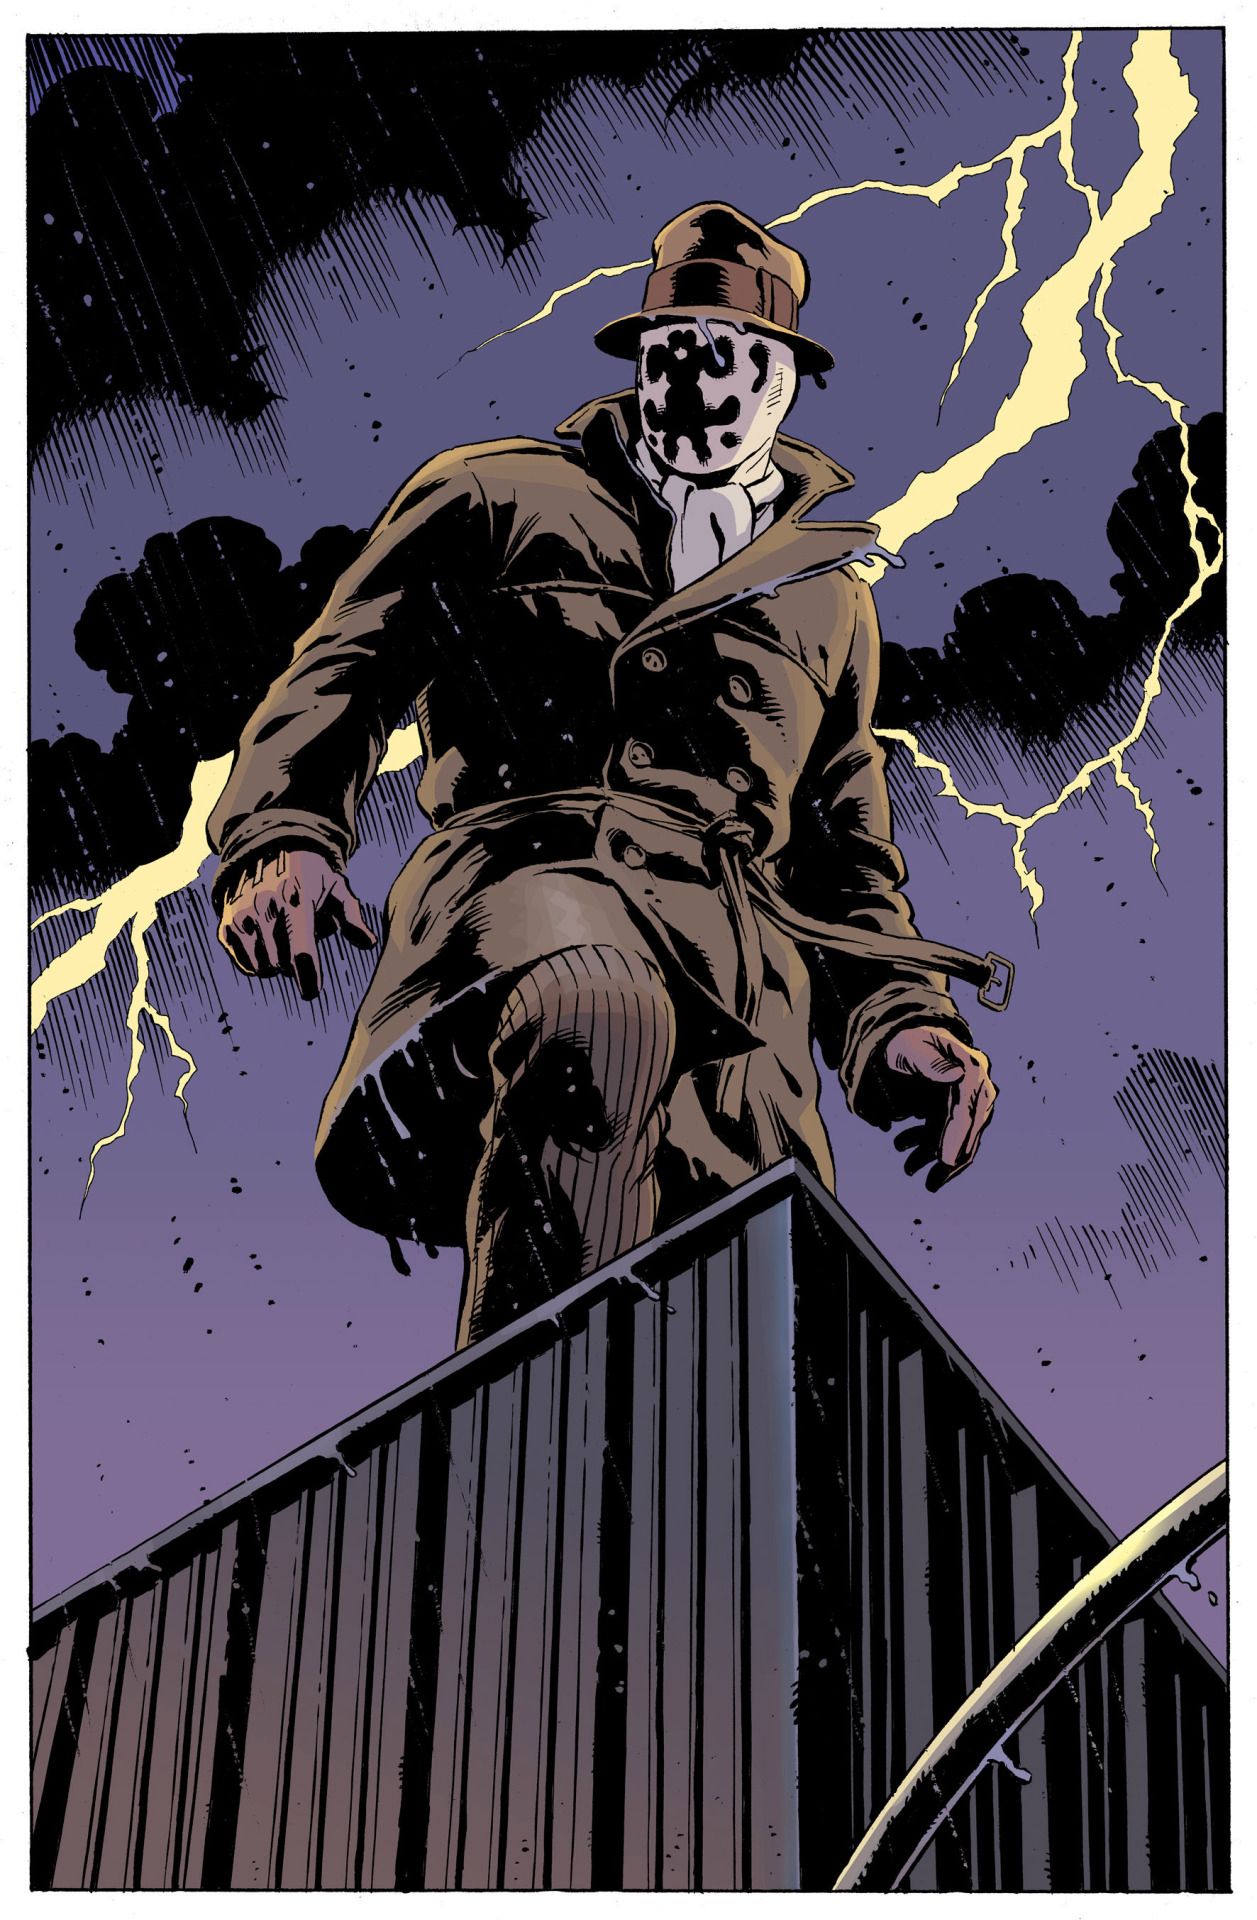 Watchmen sequel comic focusing on Rorschach